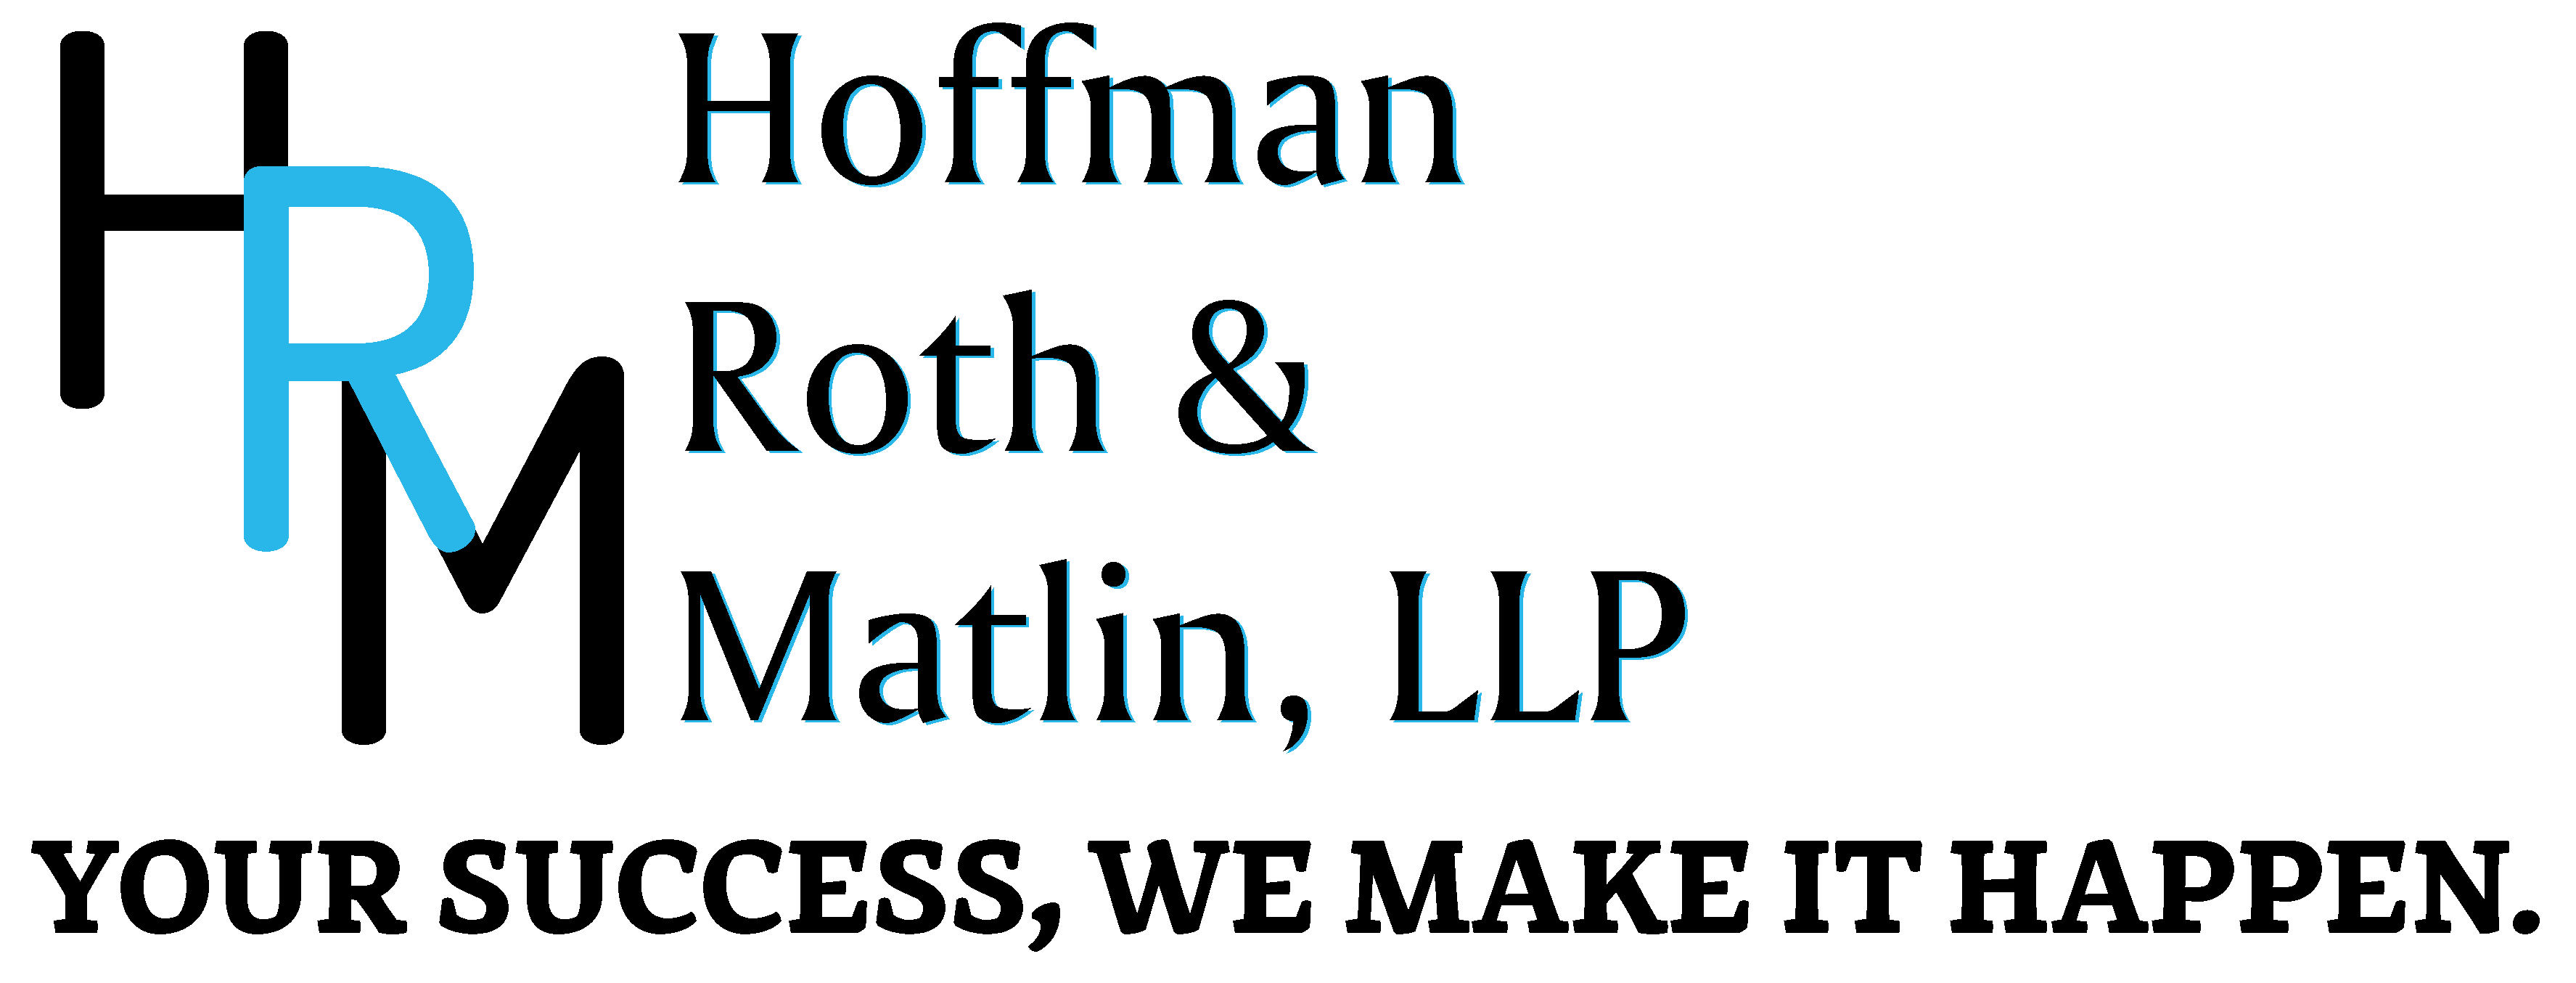 Hoffman Roth & Matlin Logo to homepage.